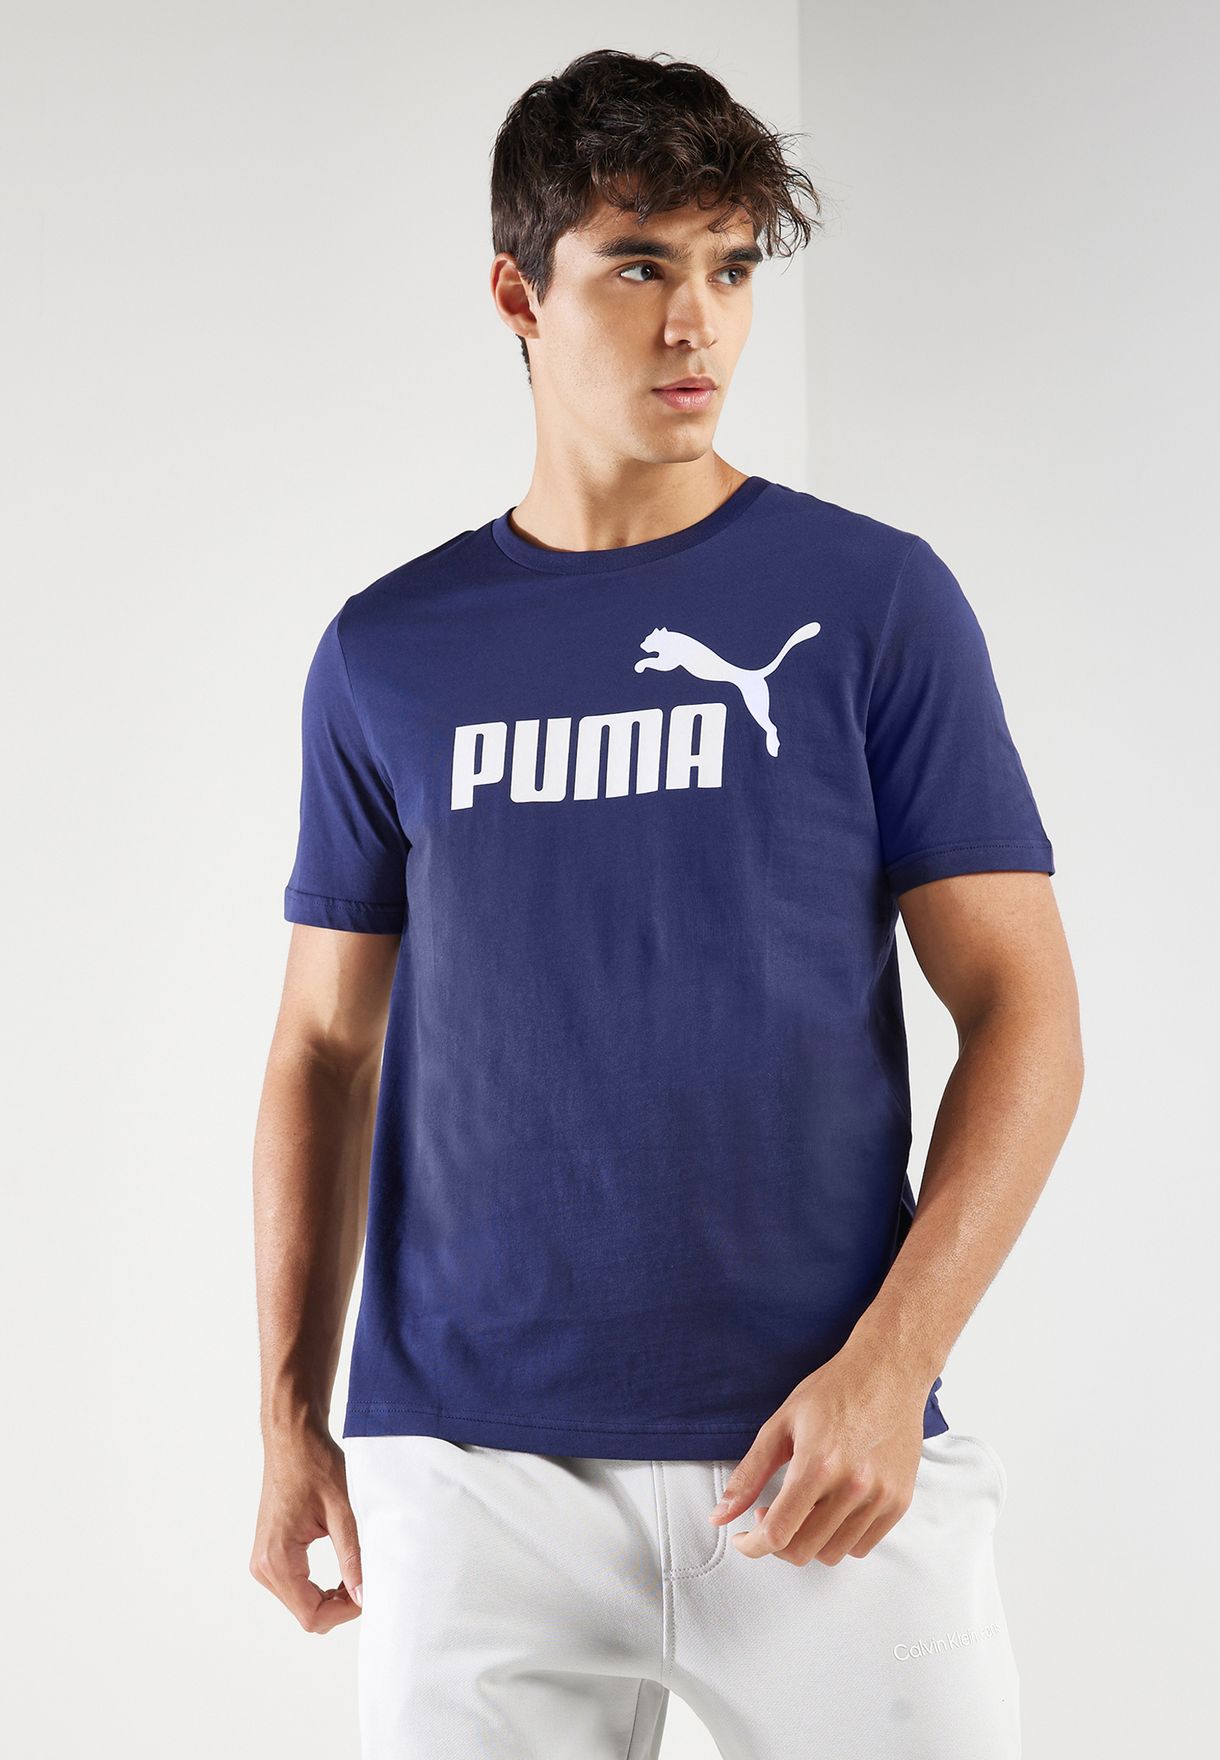 Buy > navy blue puma t shirt > in stock